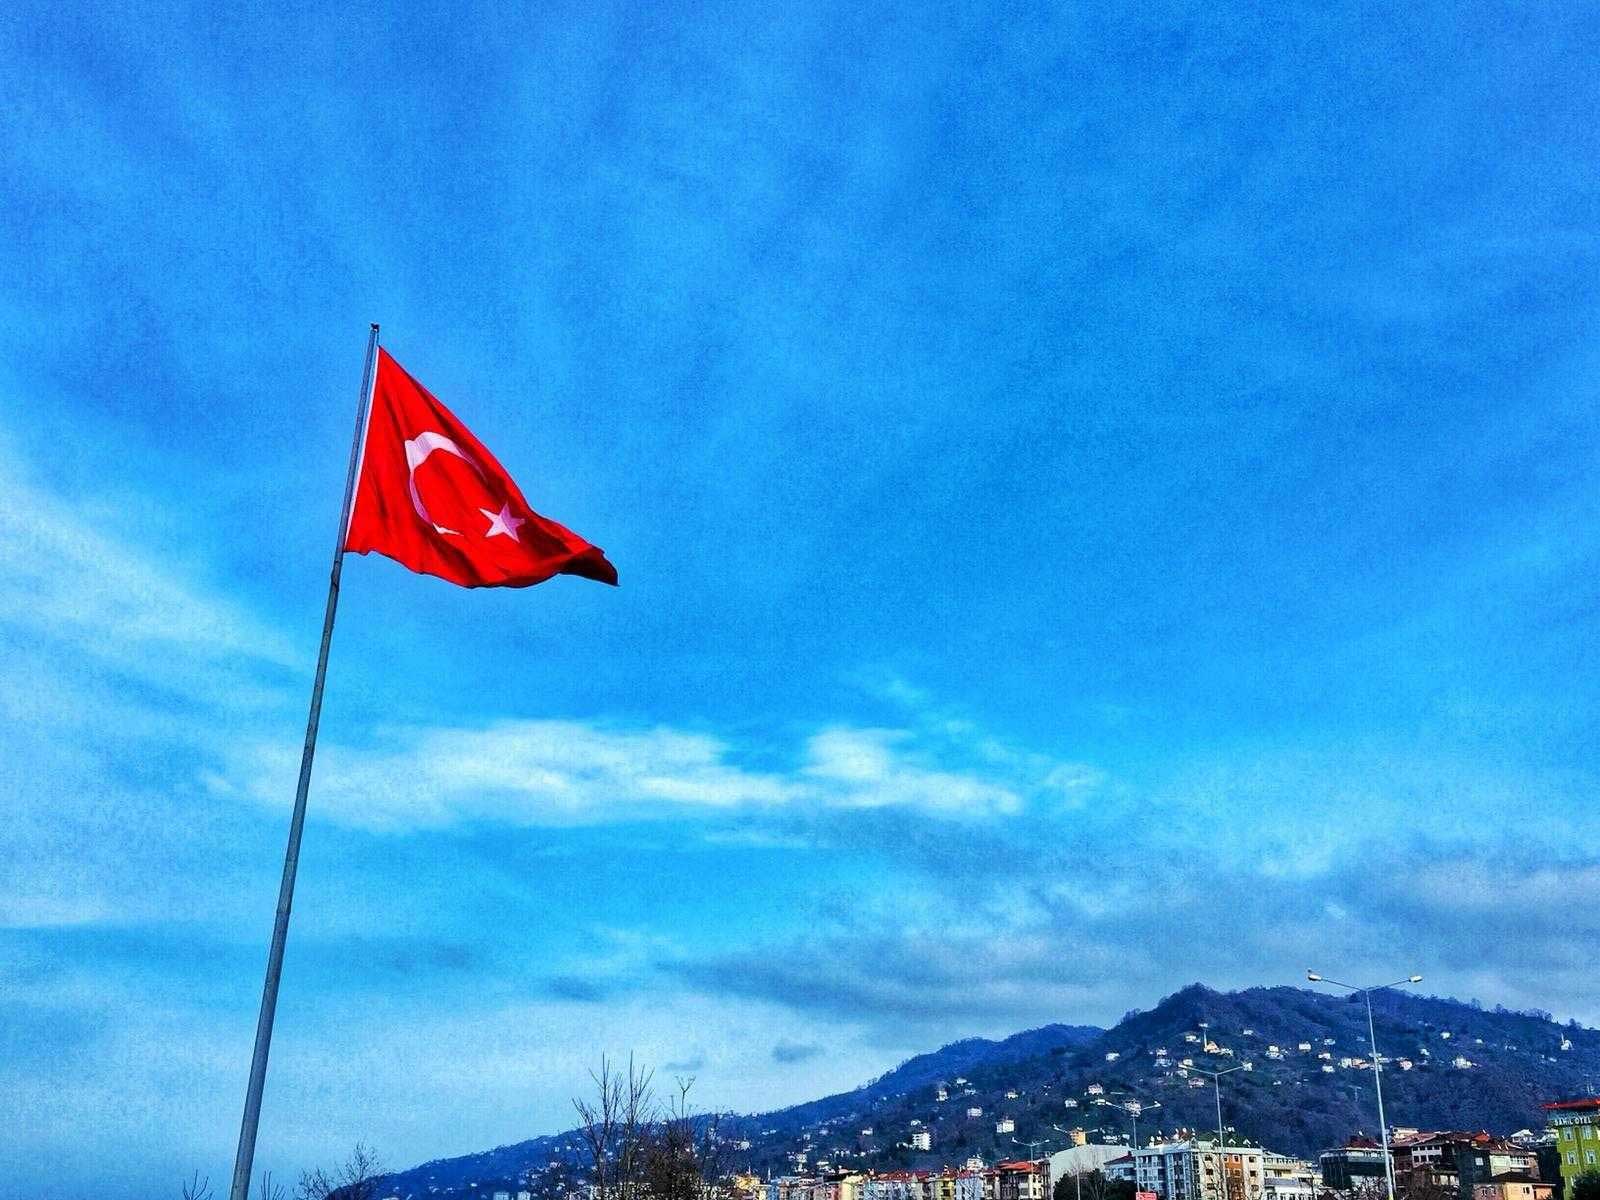 en guzel ay yildizli turk bayragi resimleri 18